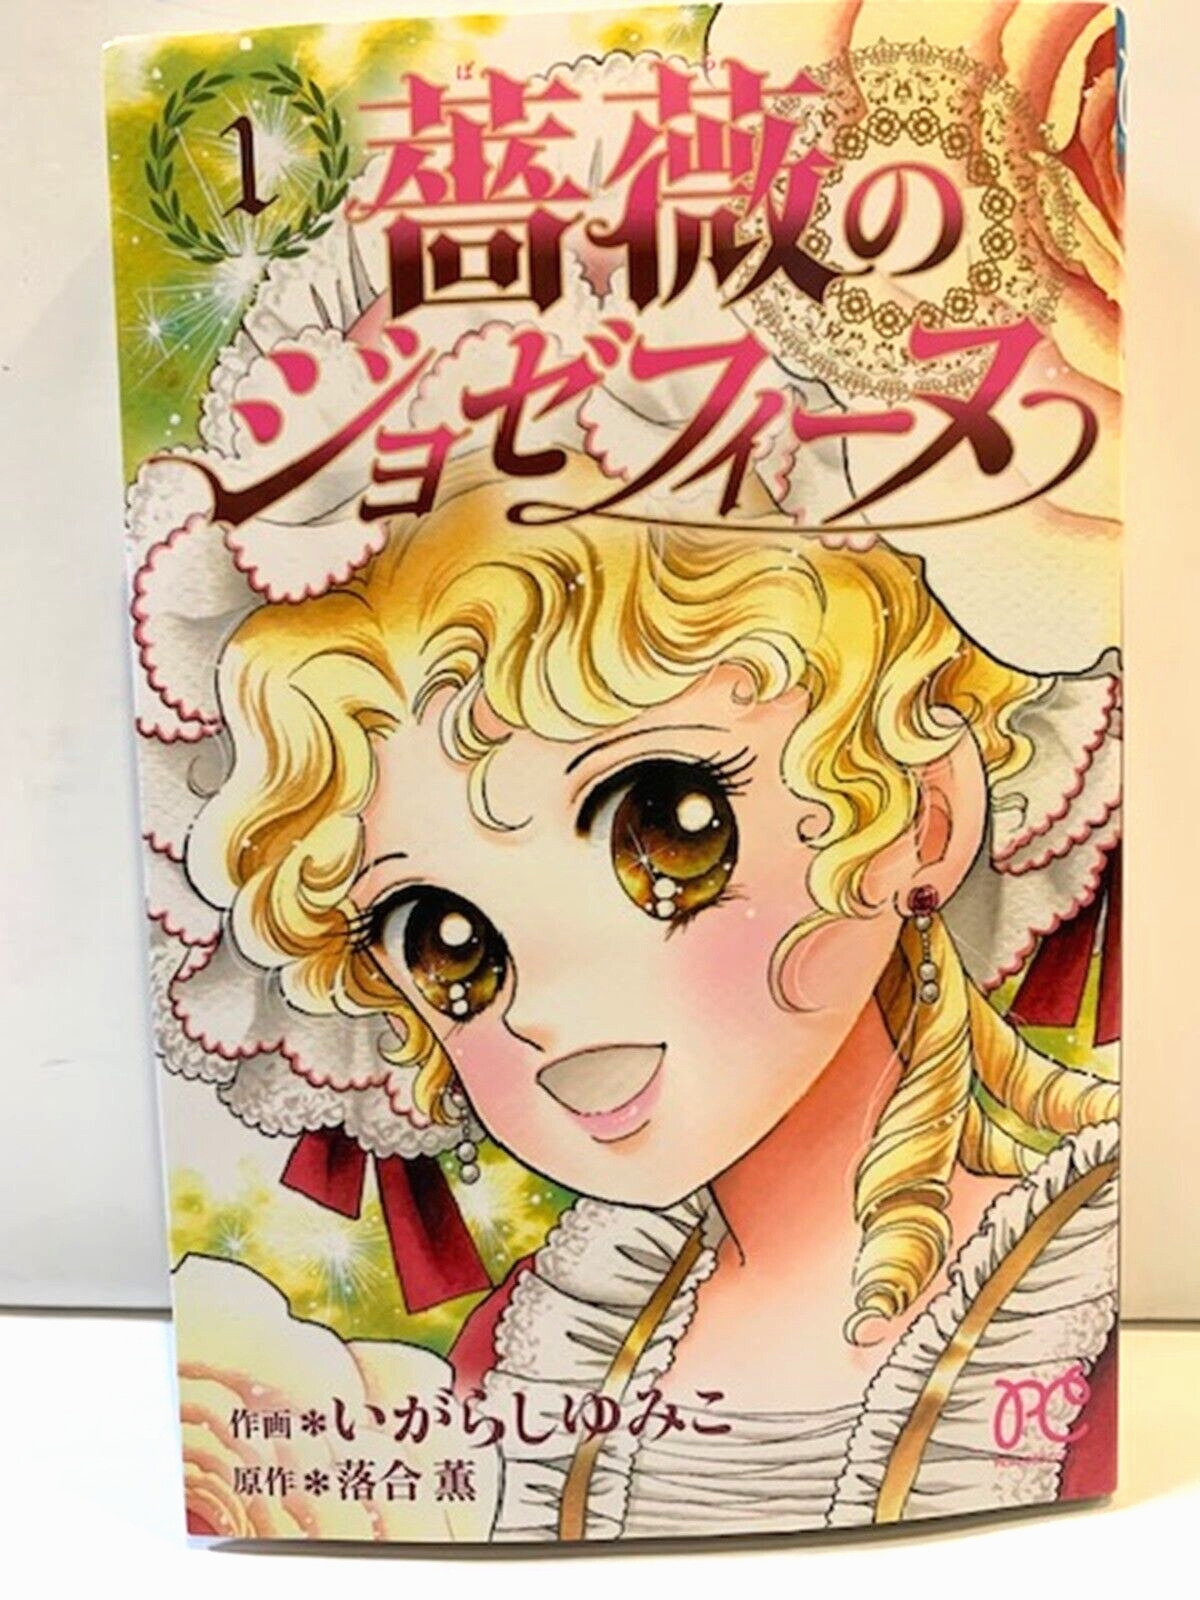 Yumiko Igarashi Handwritten Signature Ainme Comic Book Josephine of Roses  Japan